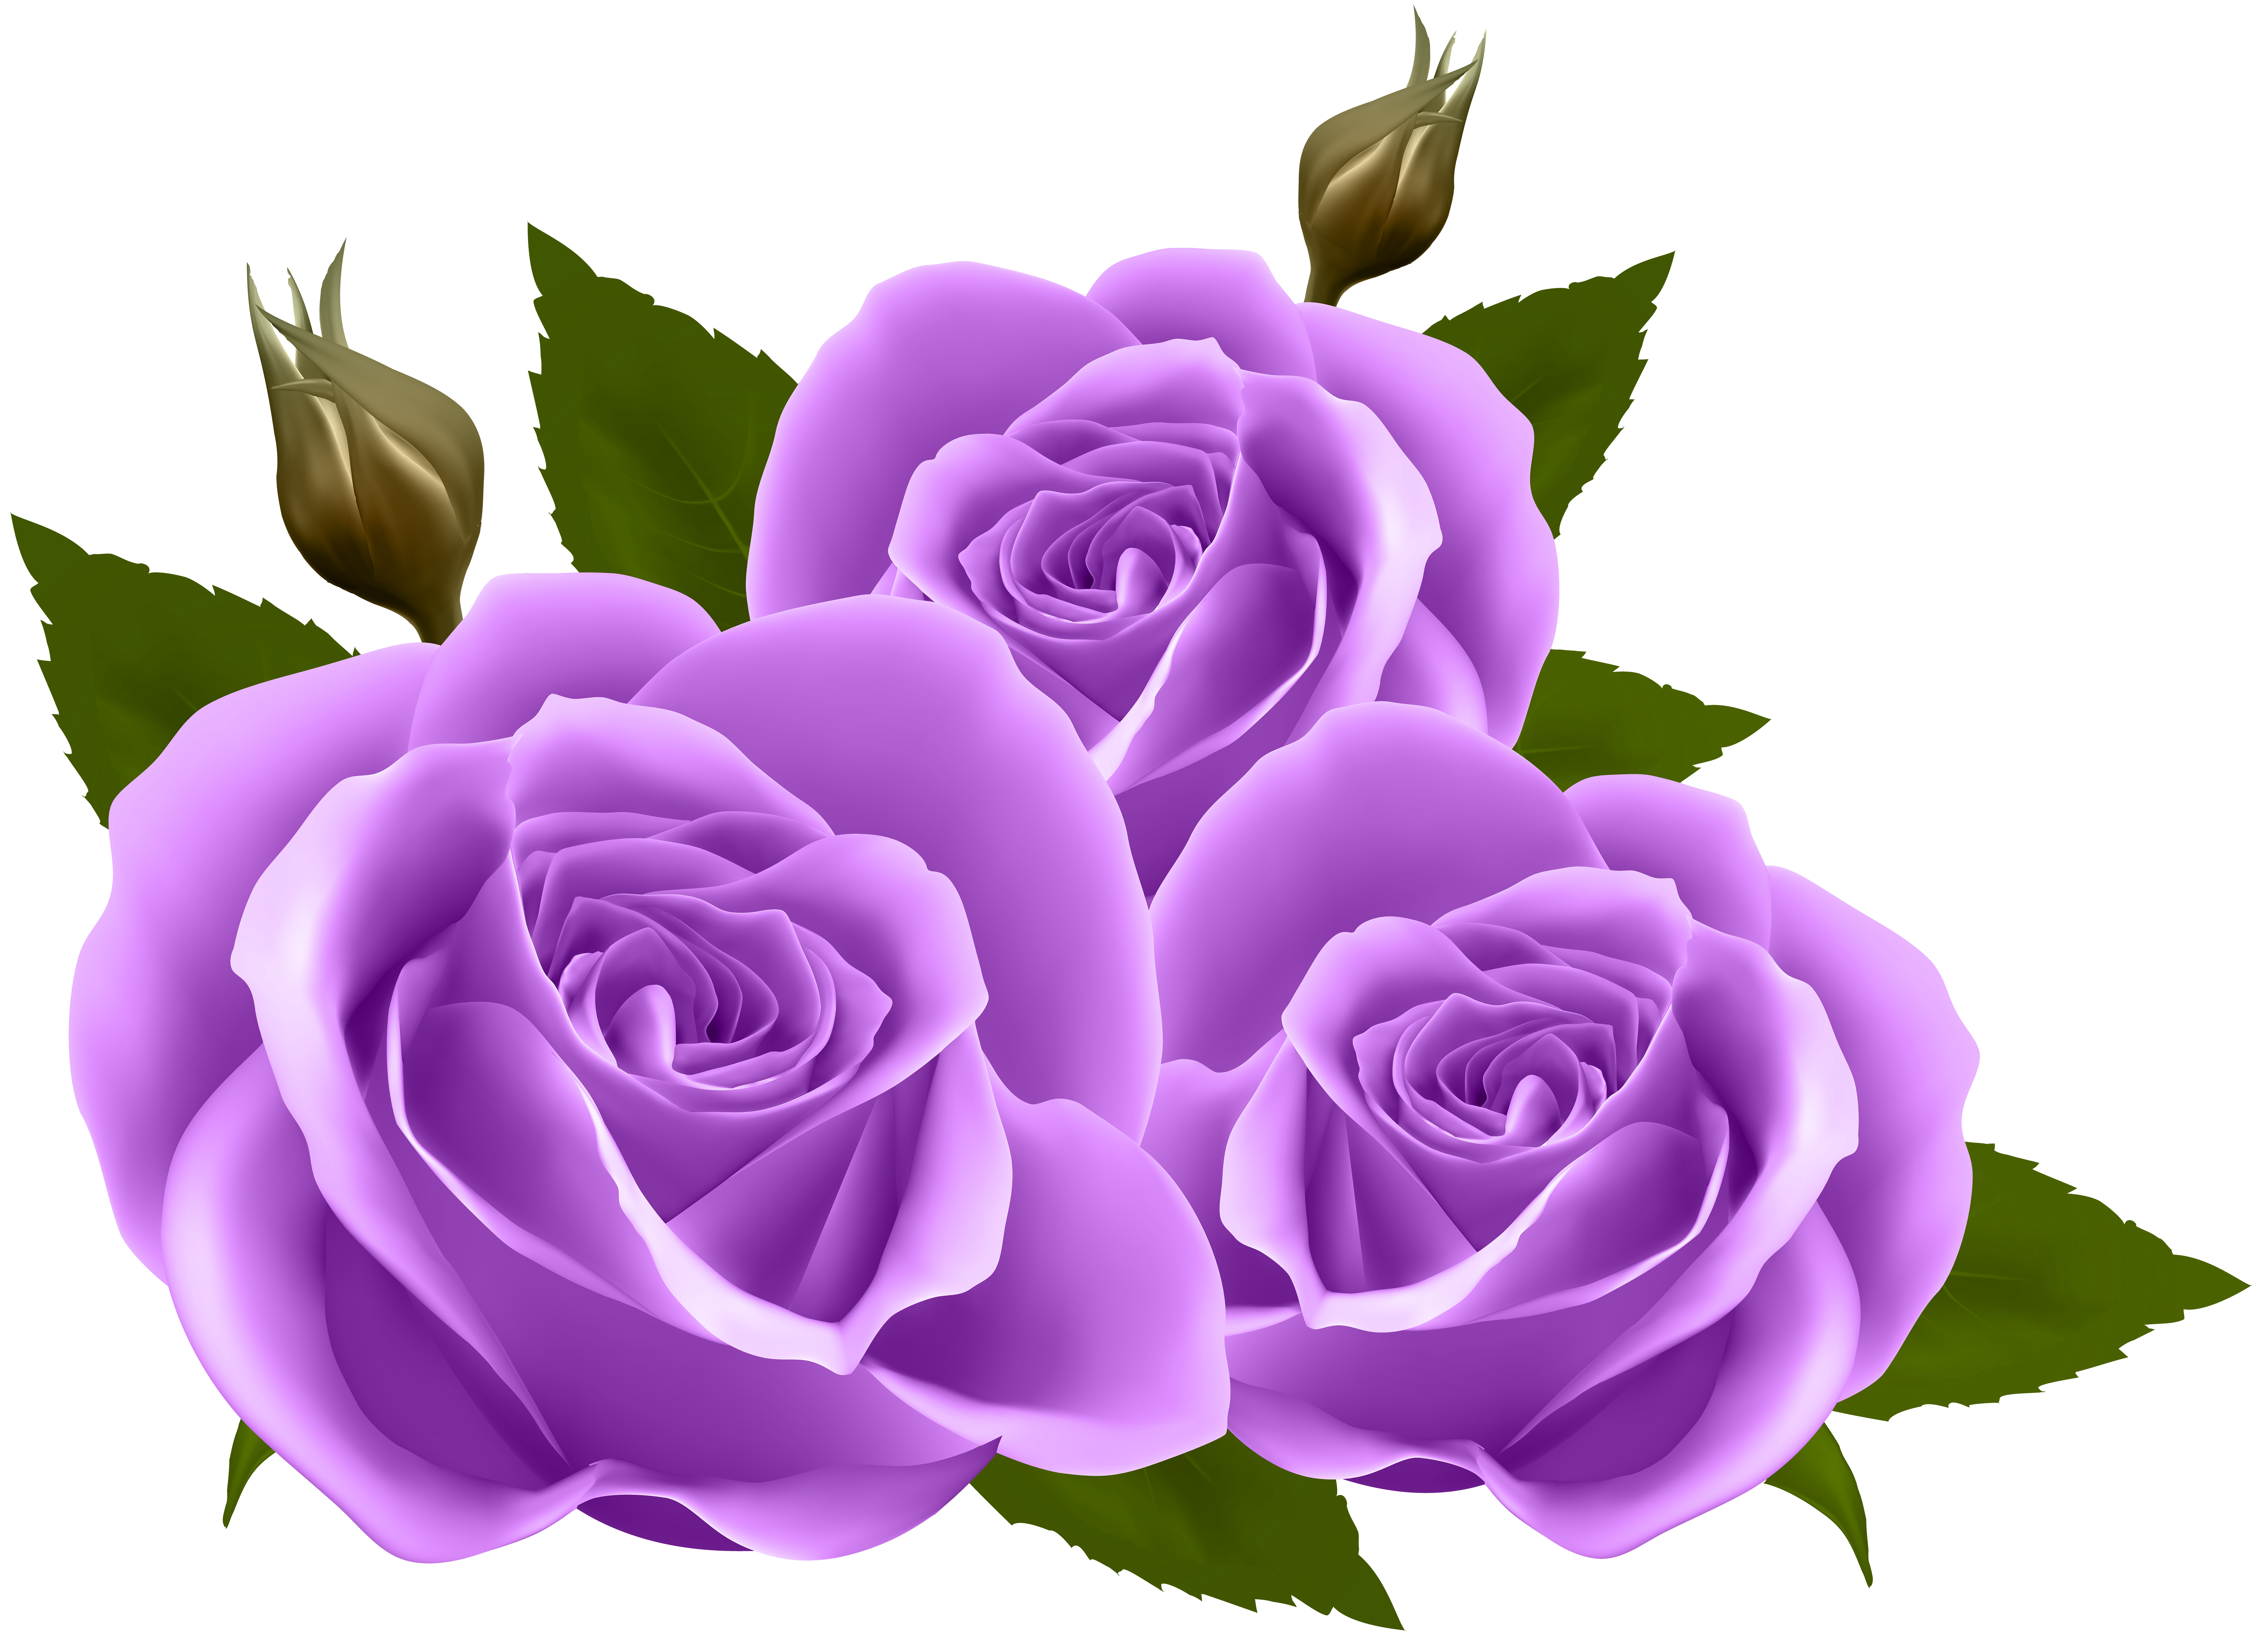 Purple Roses PNG Clip Art Image.